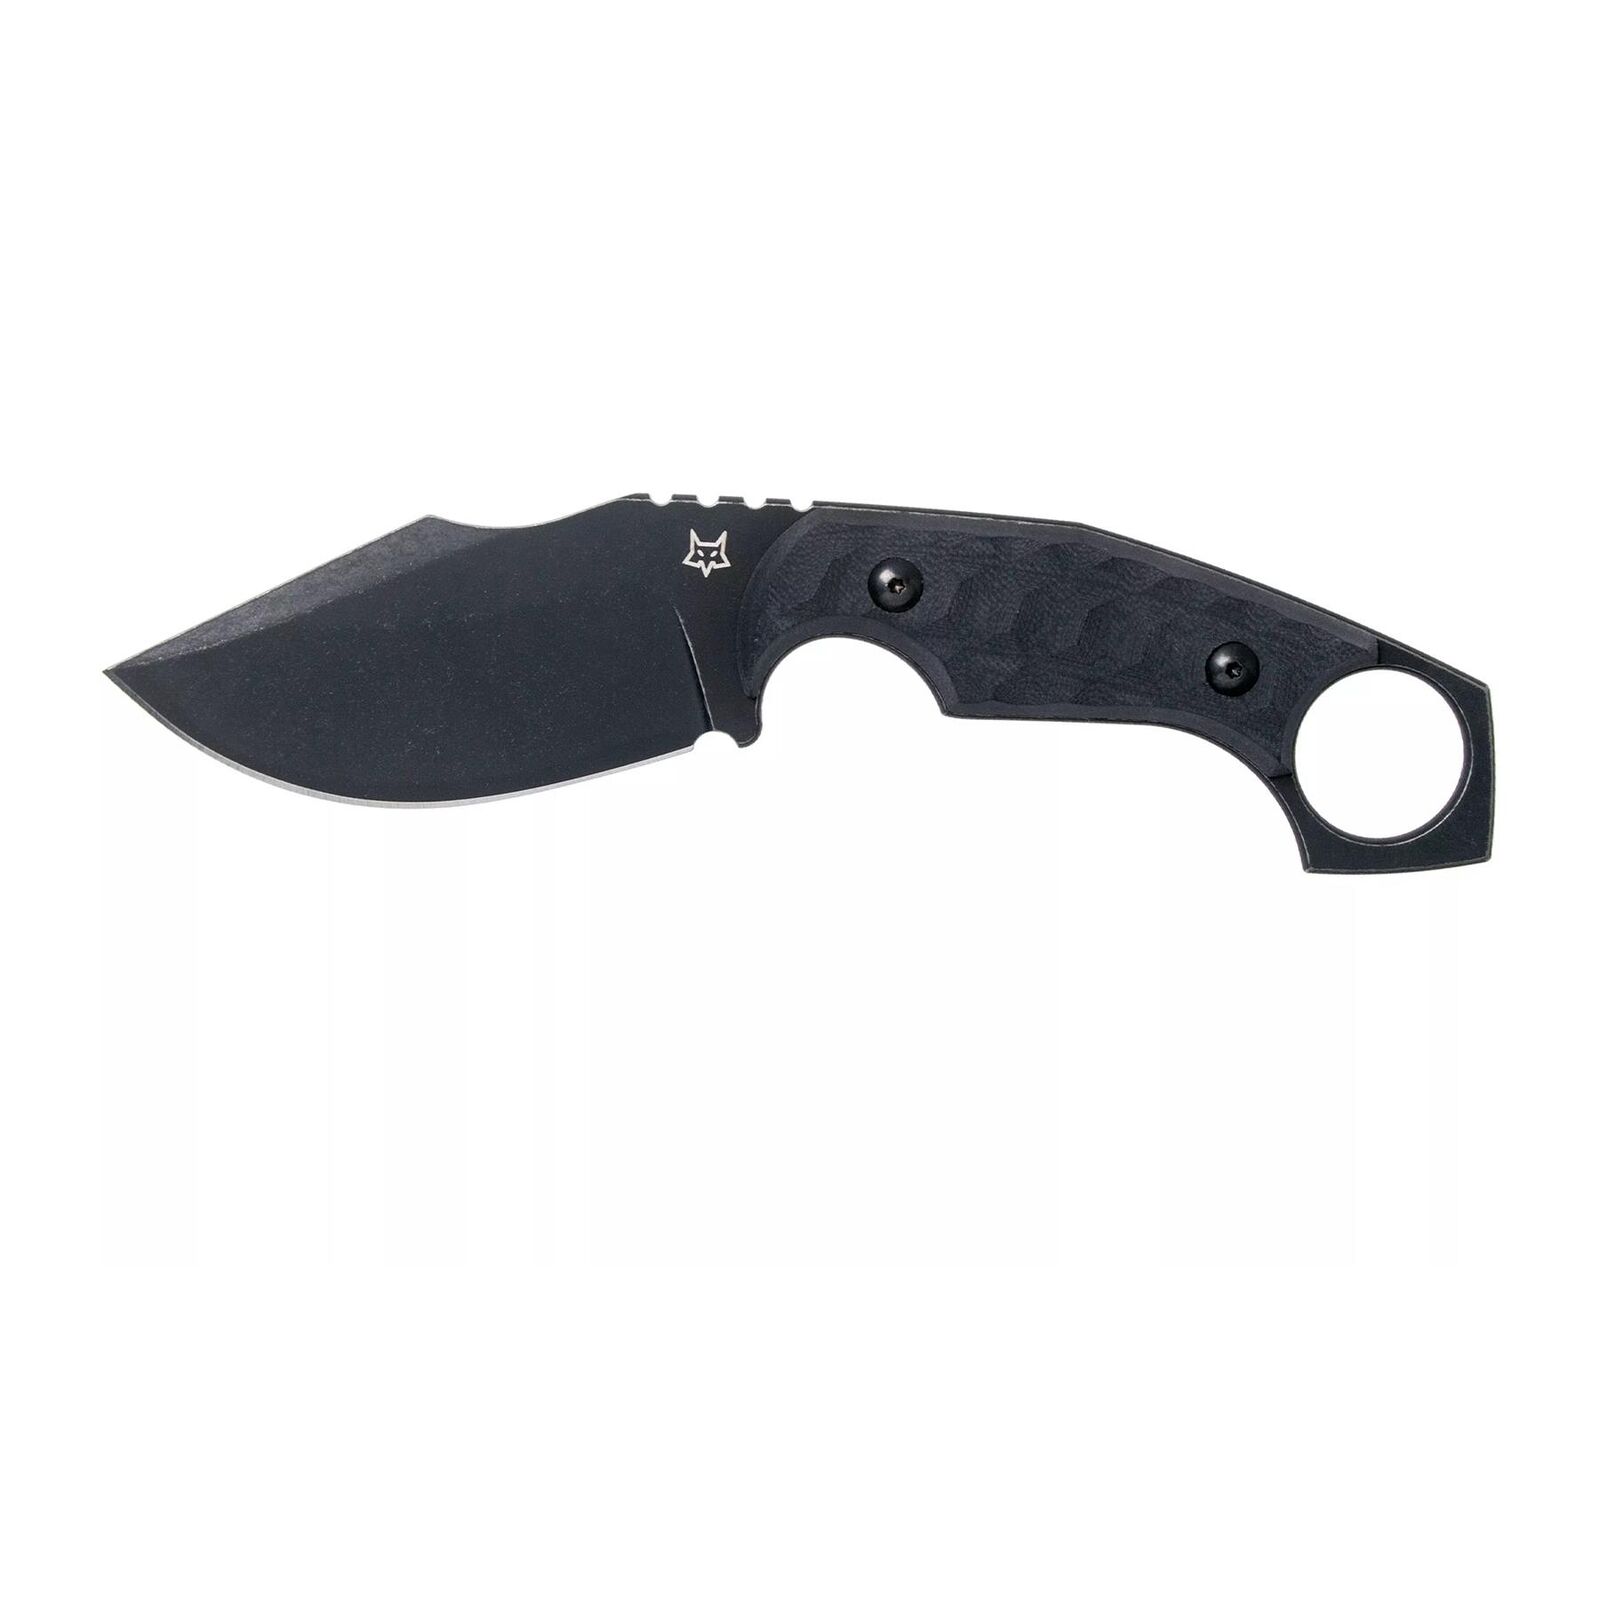 FoxKnives MONKEY THUMPER Fixed blade Niolox steel survival backup tactical knife